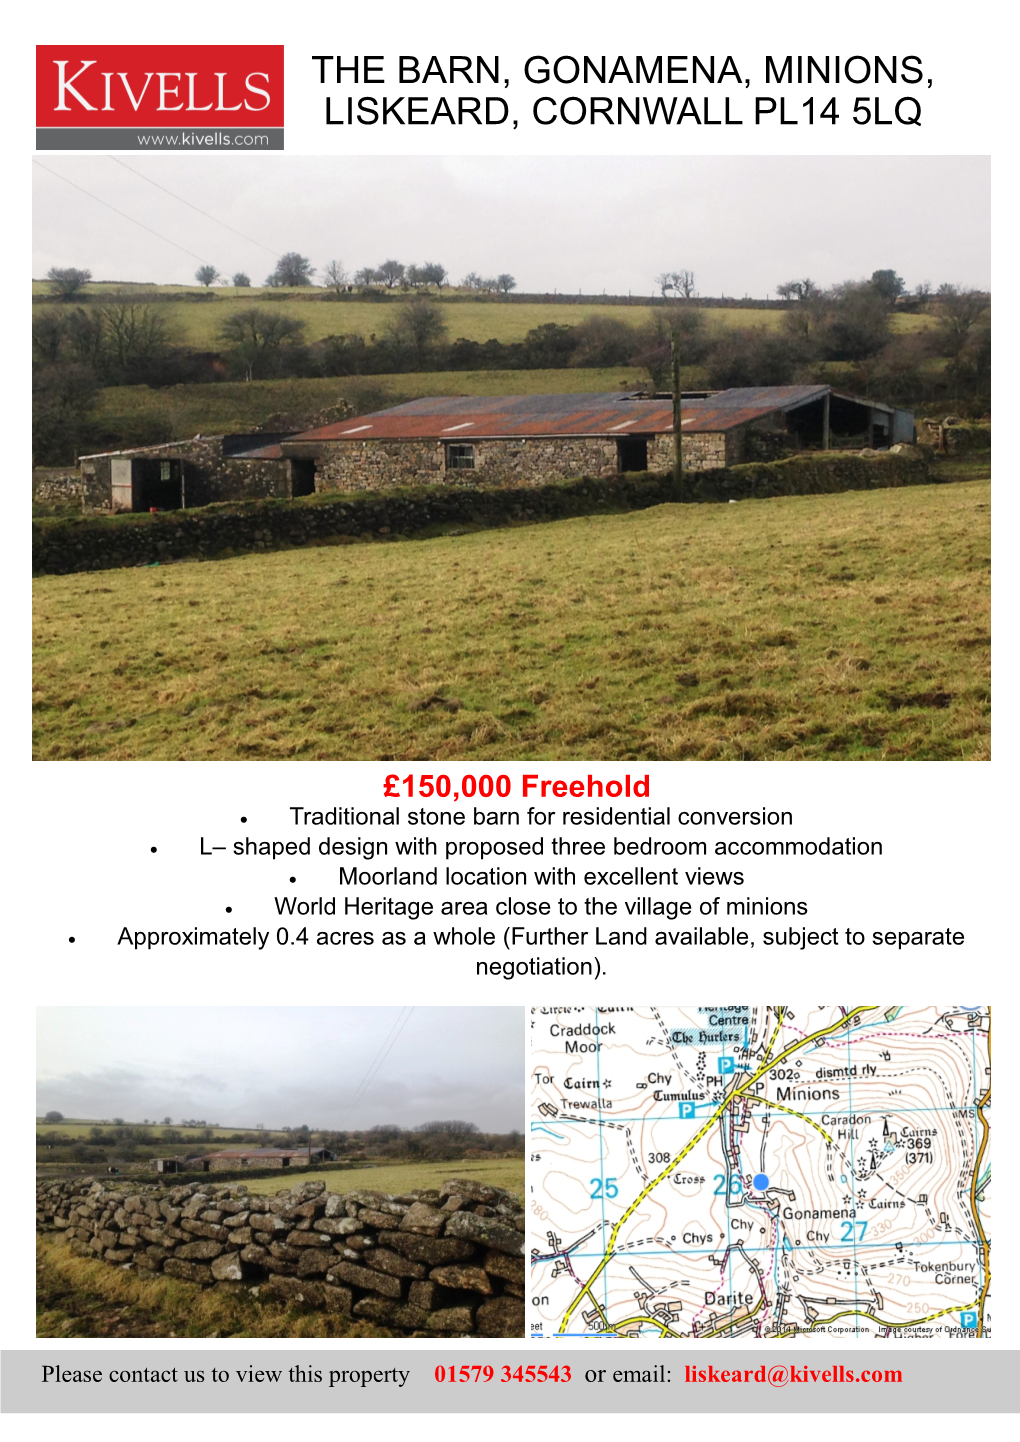 The Barn, Gonamena, Minions, Liskeard, Cornwall Pl14 5Lq